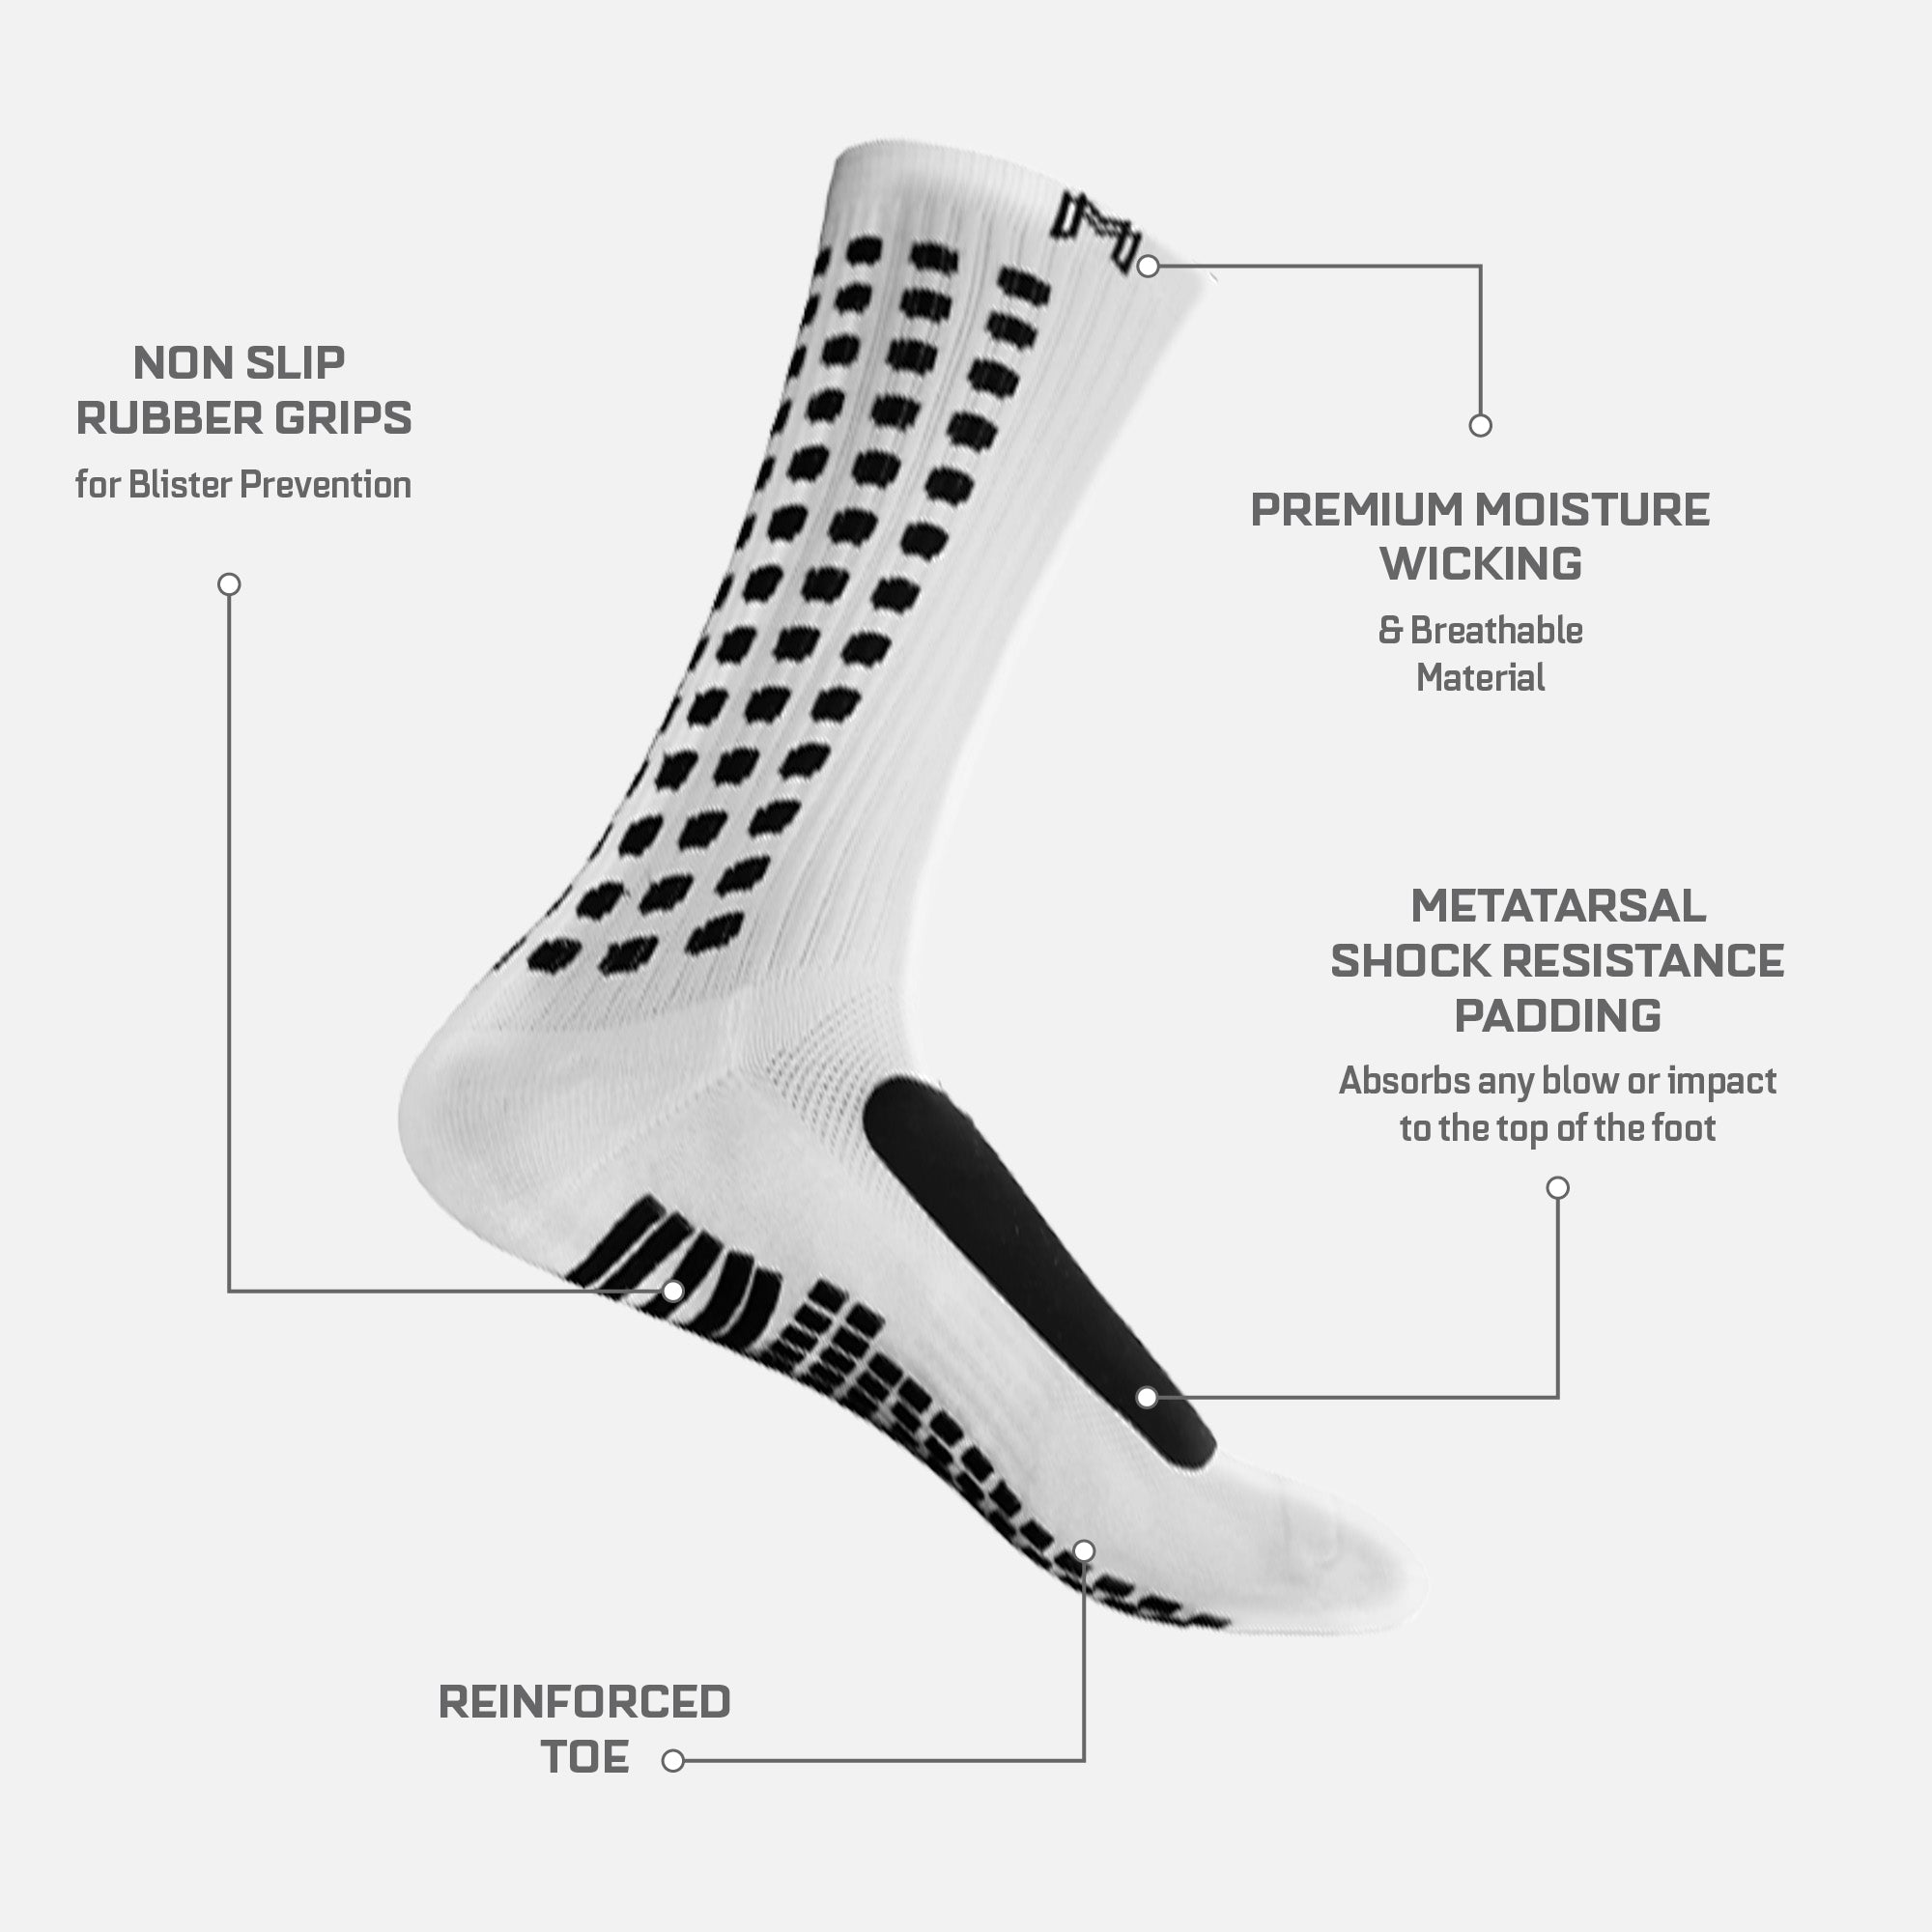 Adult/Kids Matching Grip Socks 4-pack — Grippits